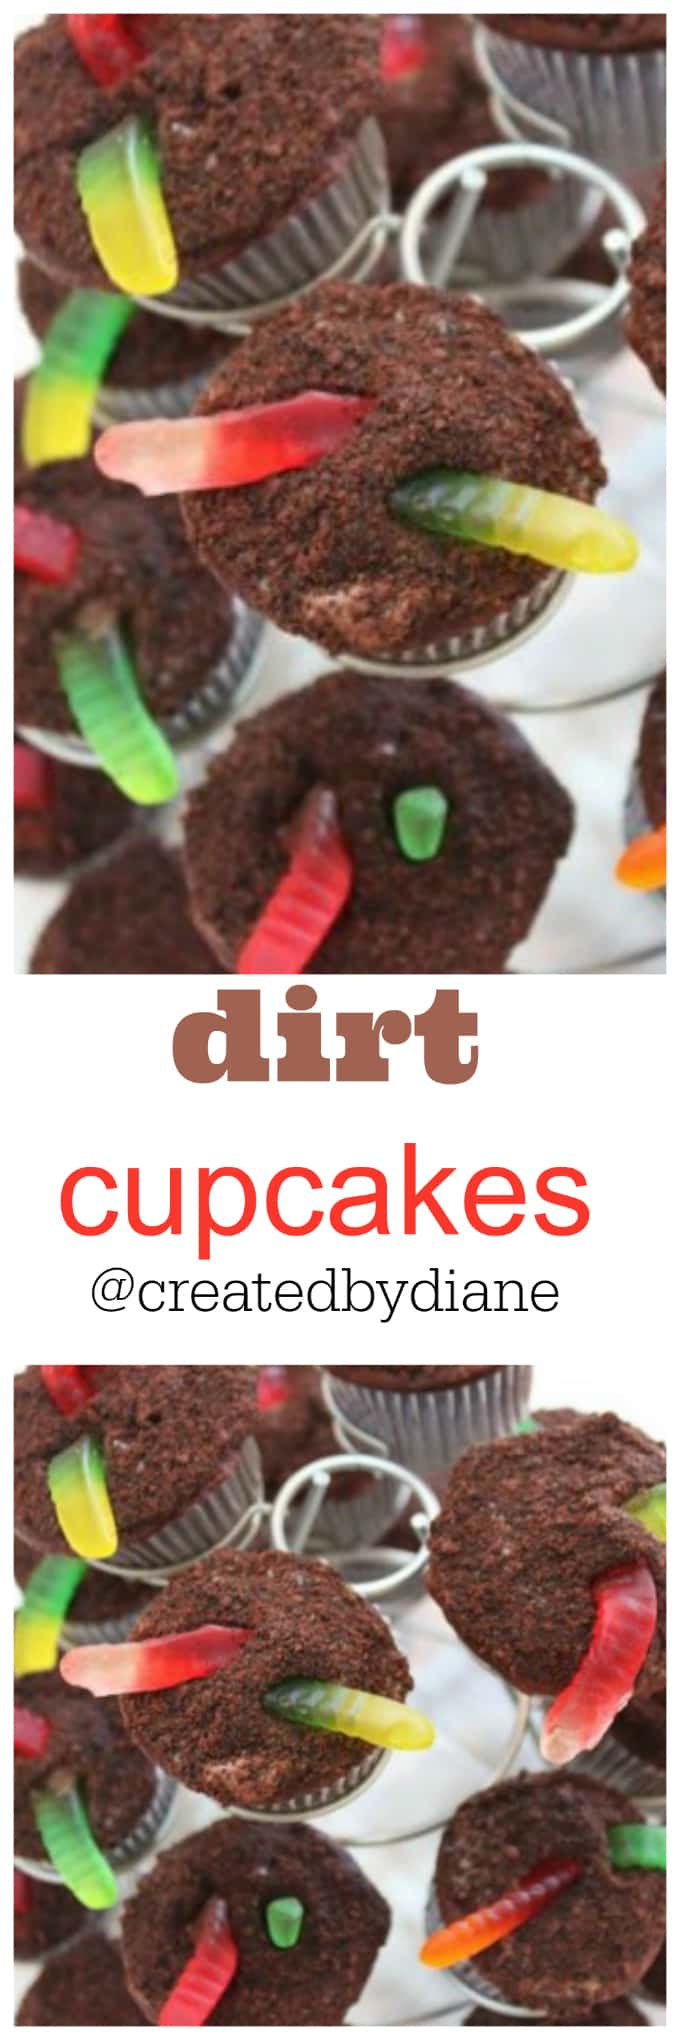 dirt cupcakes @createdbydiane